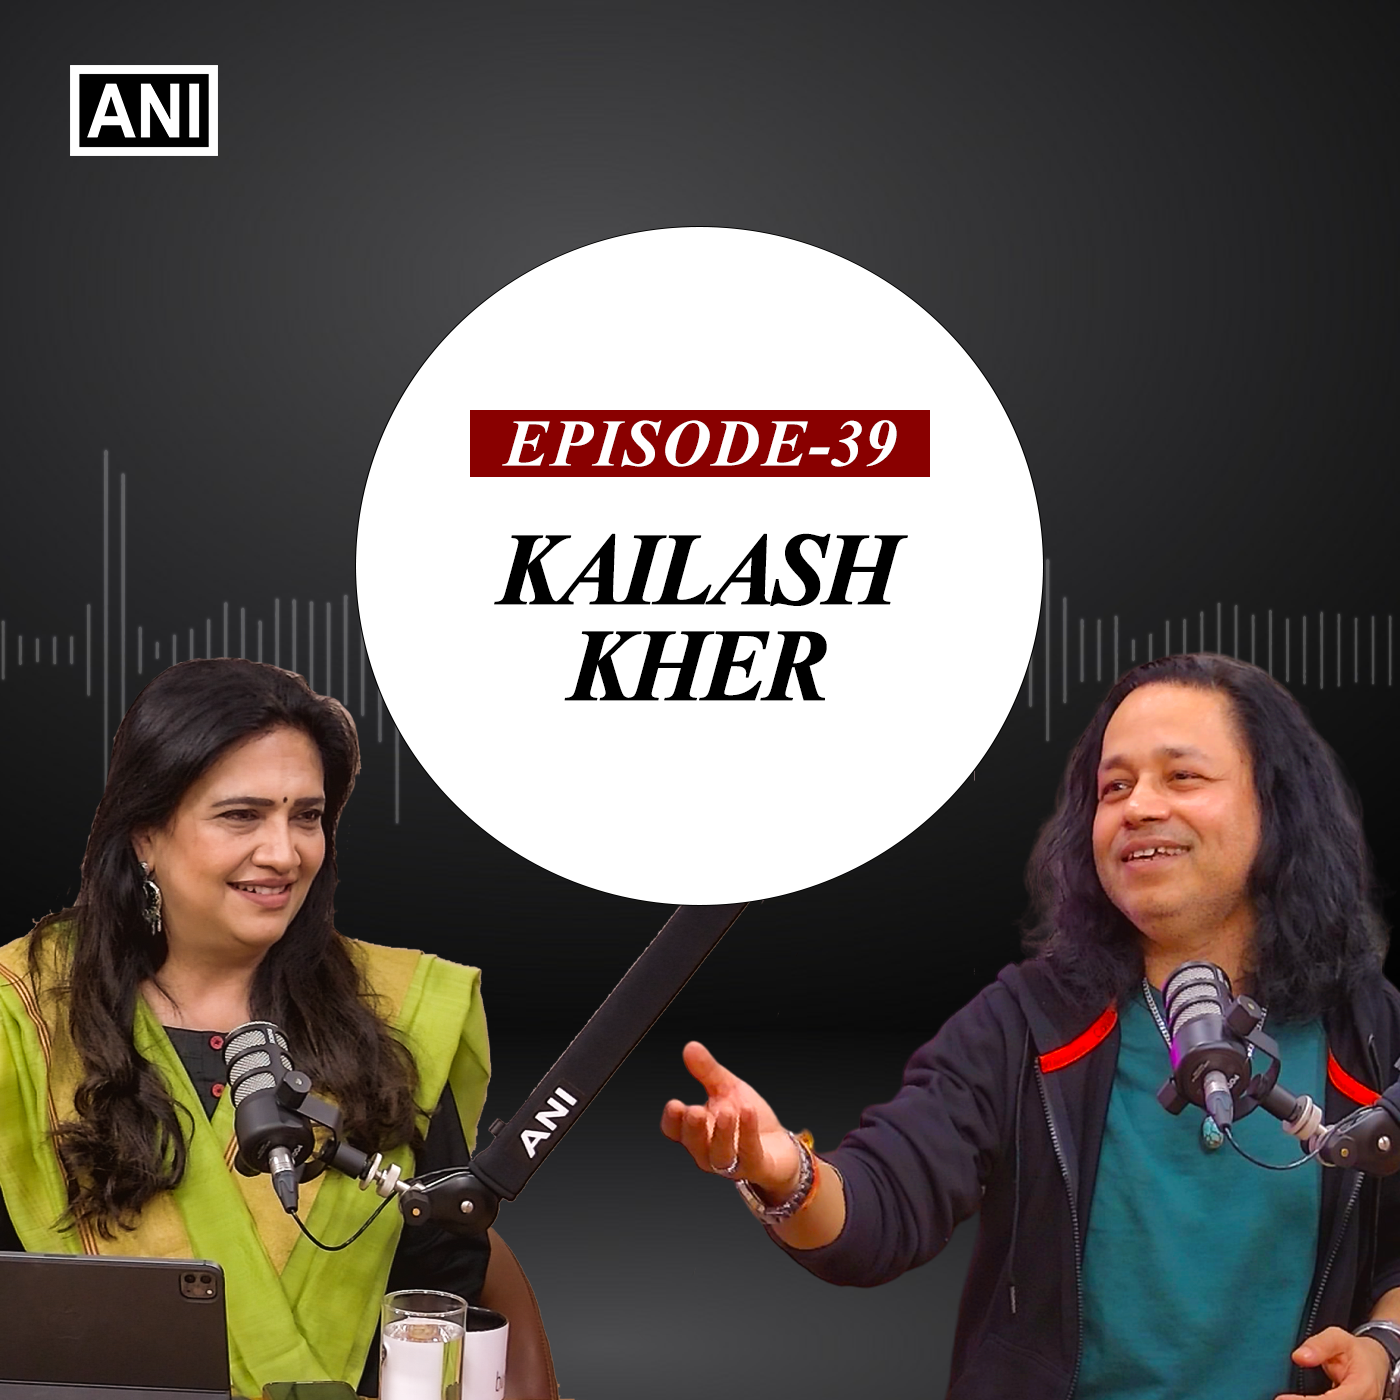 Episode 39 - Soul-stirring conversation with singer Kailash Kher